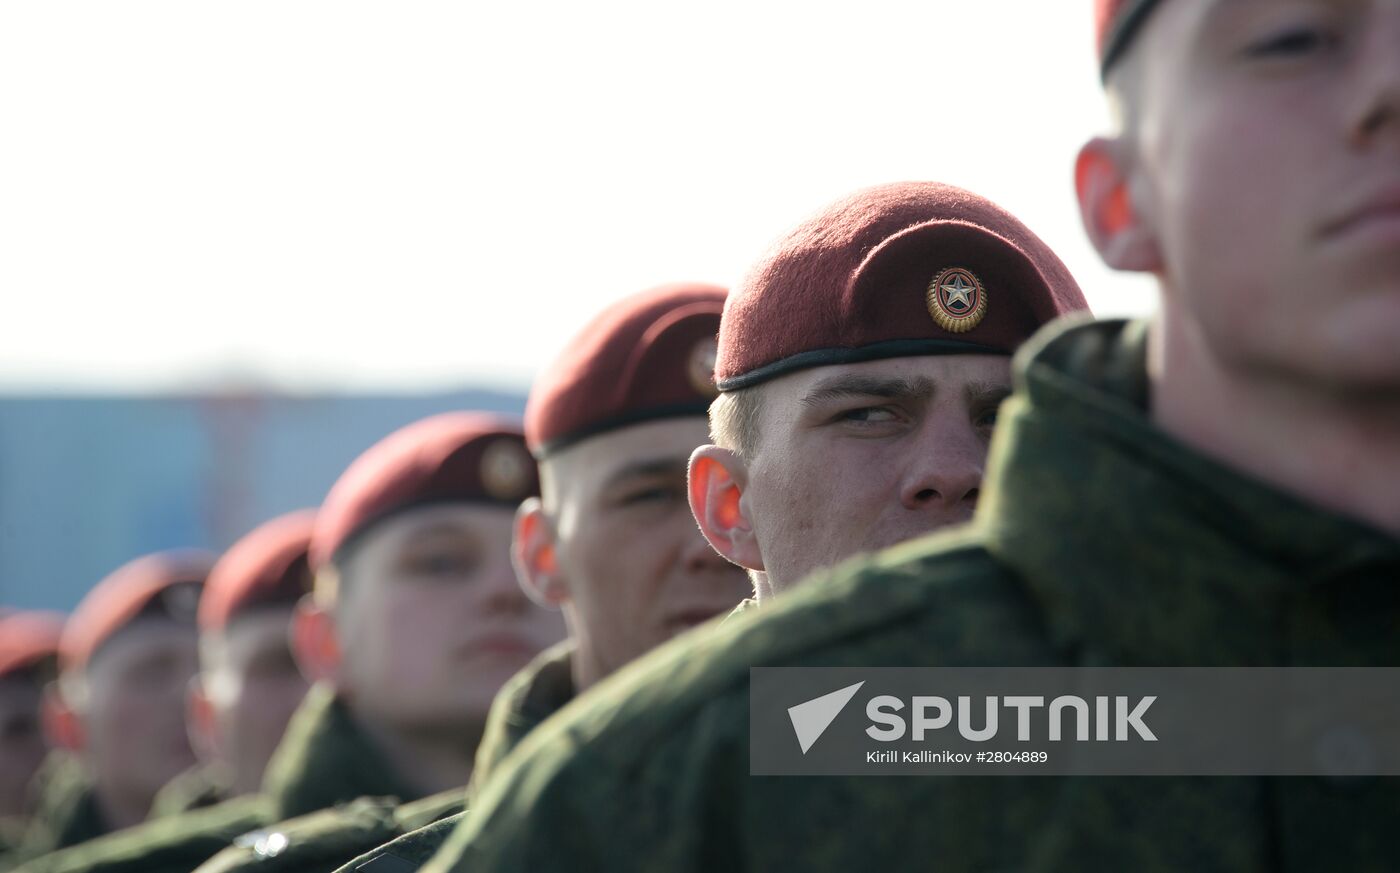 Parade practice of Dzerzhinsky Raipd Deployment Division